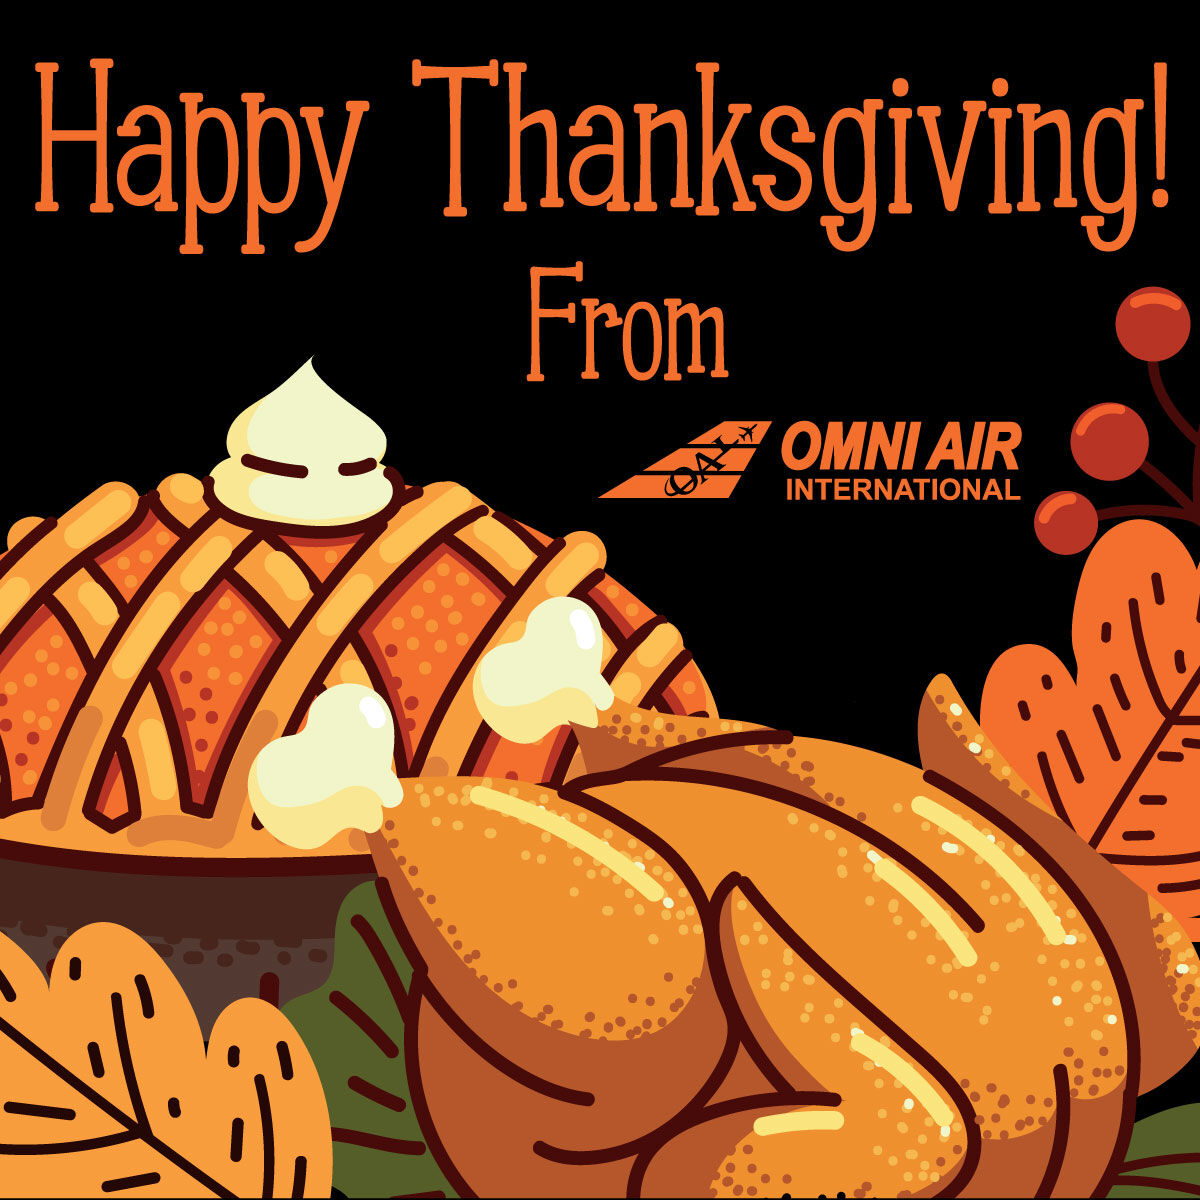 Happy Thanksgiving from Omni Air International! #Thanksgiving